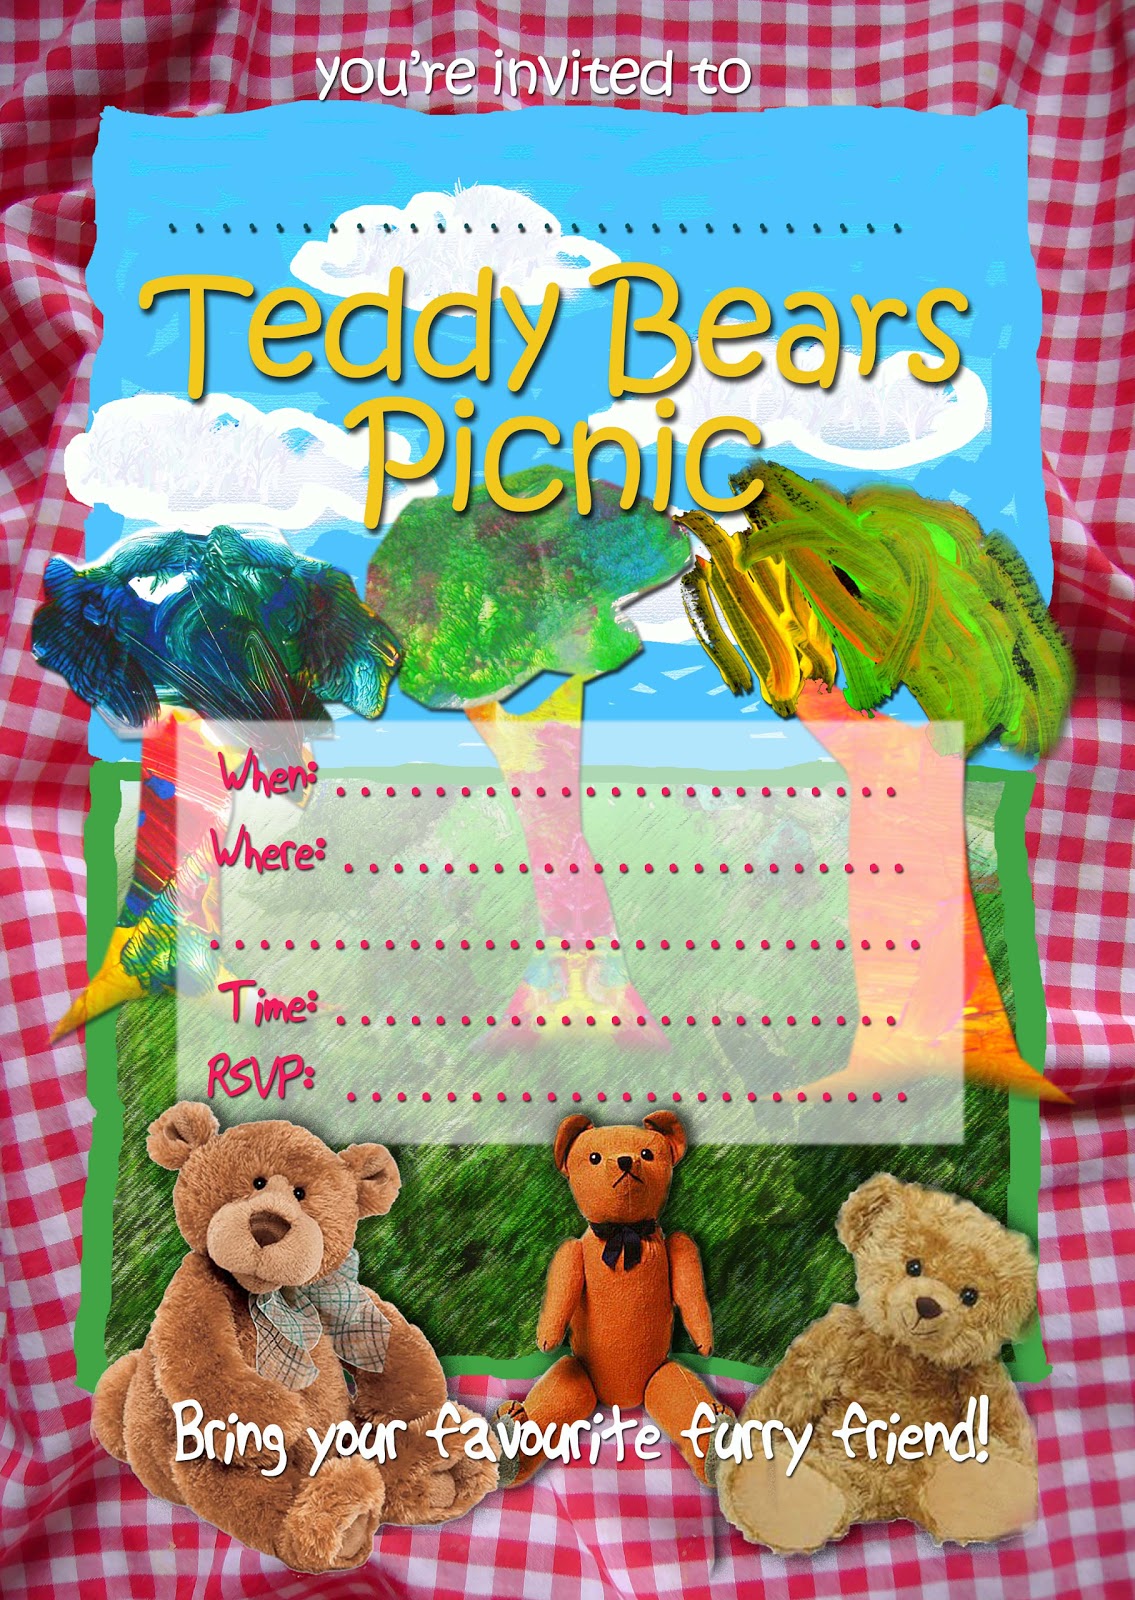 FREE Kids Party Invitations: Teddy Bears Picnic Invitation